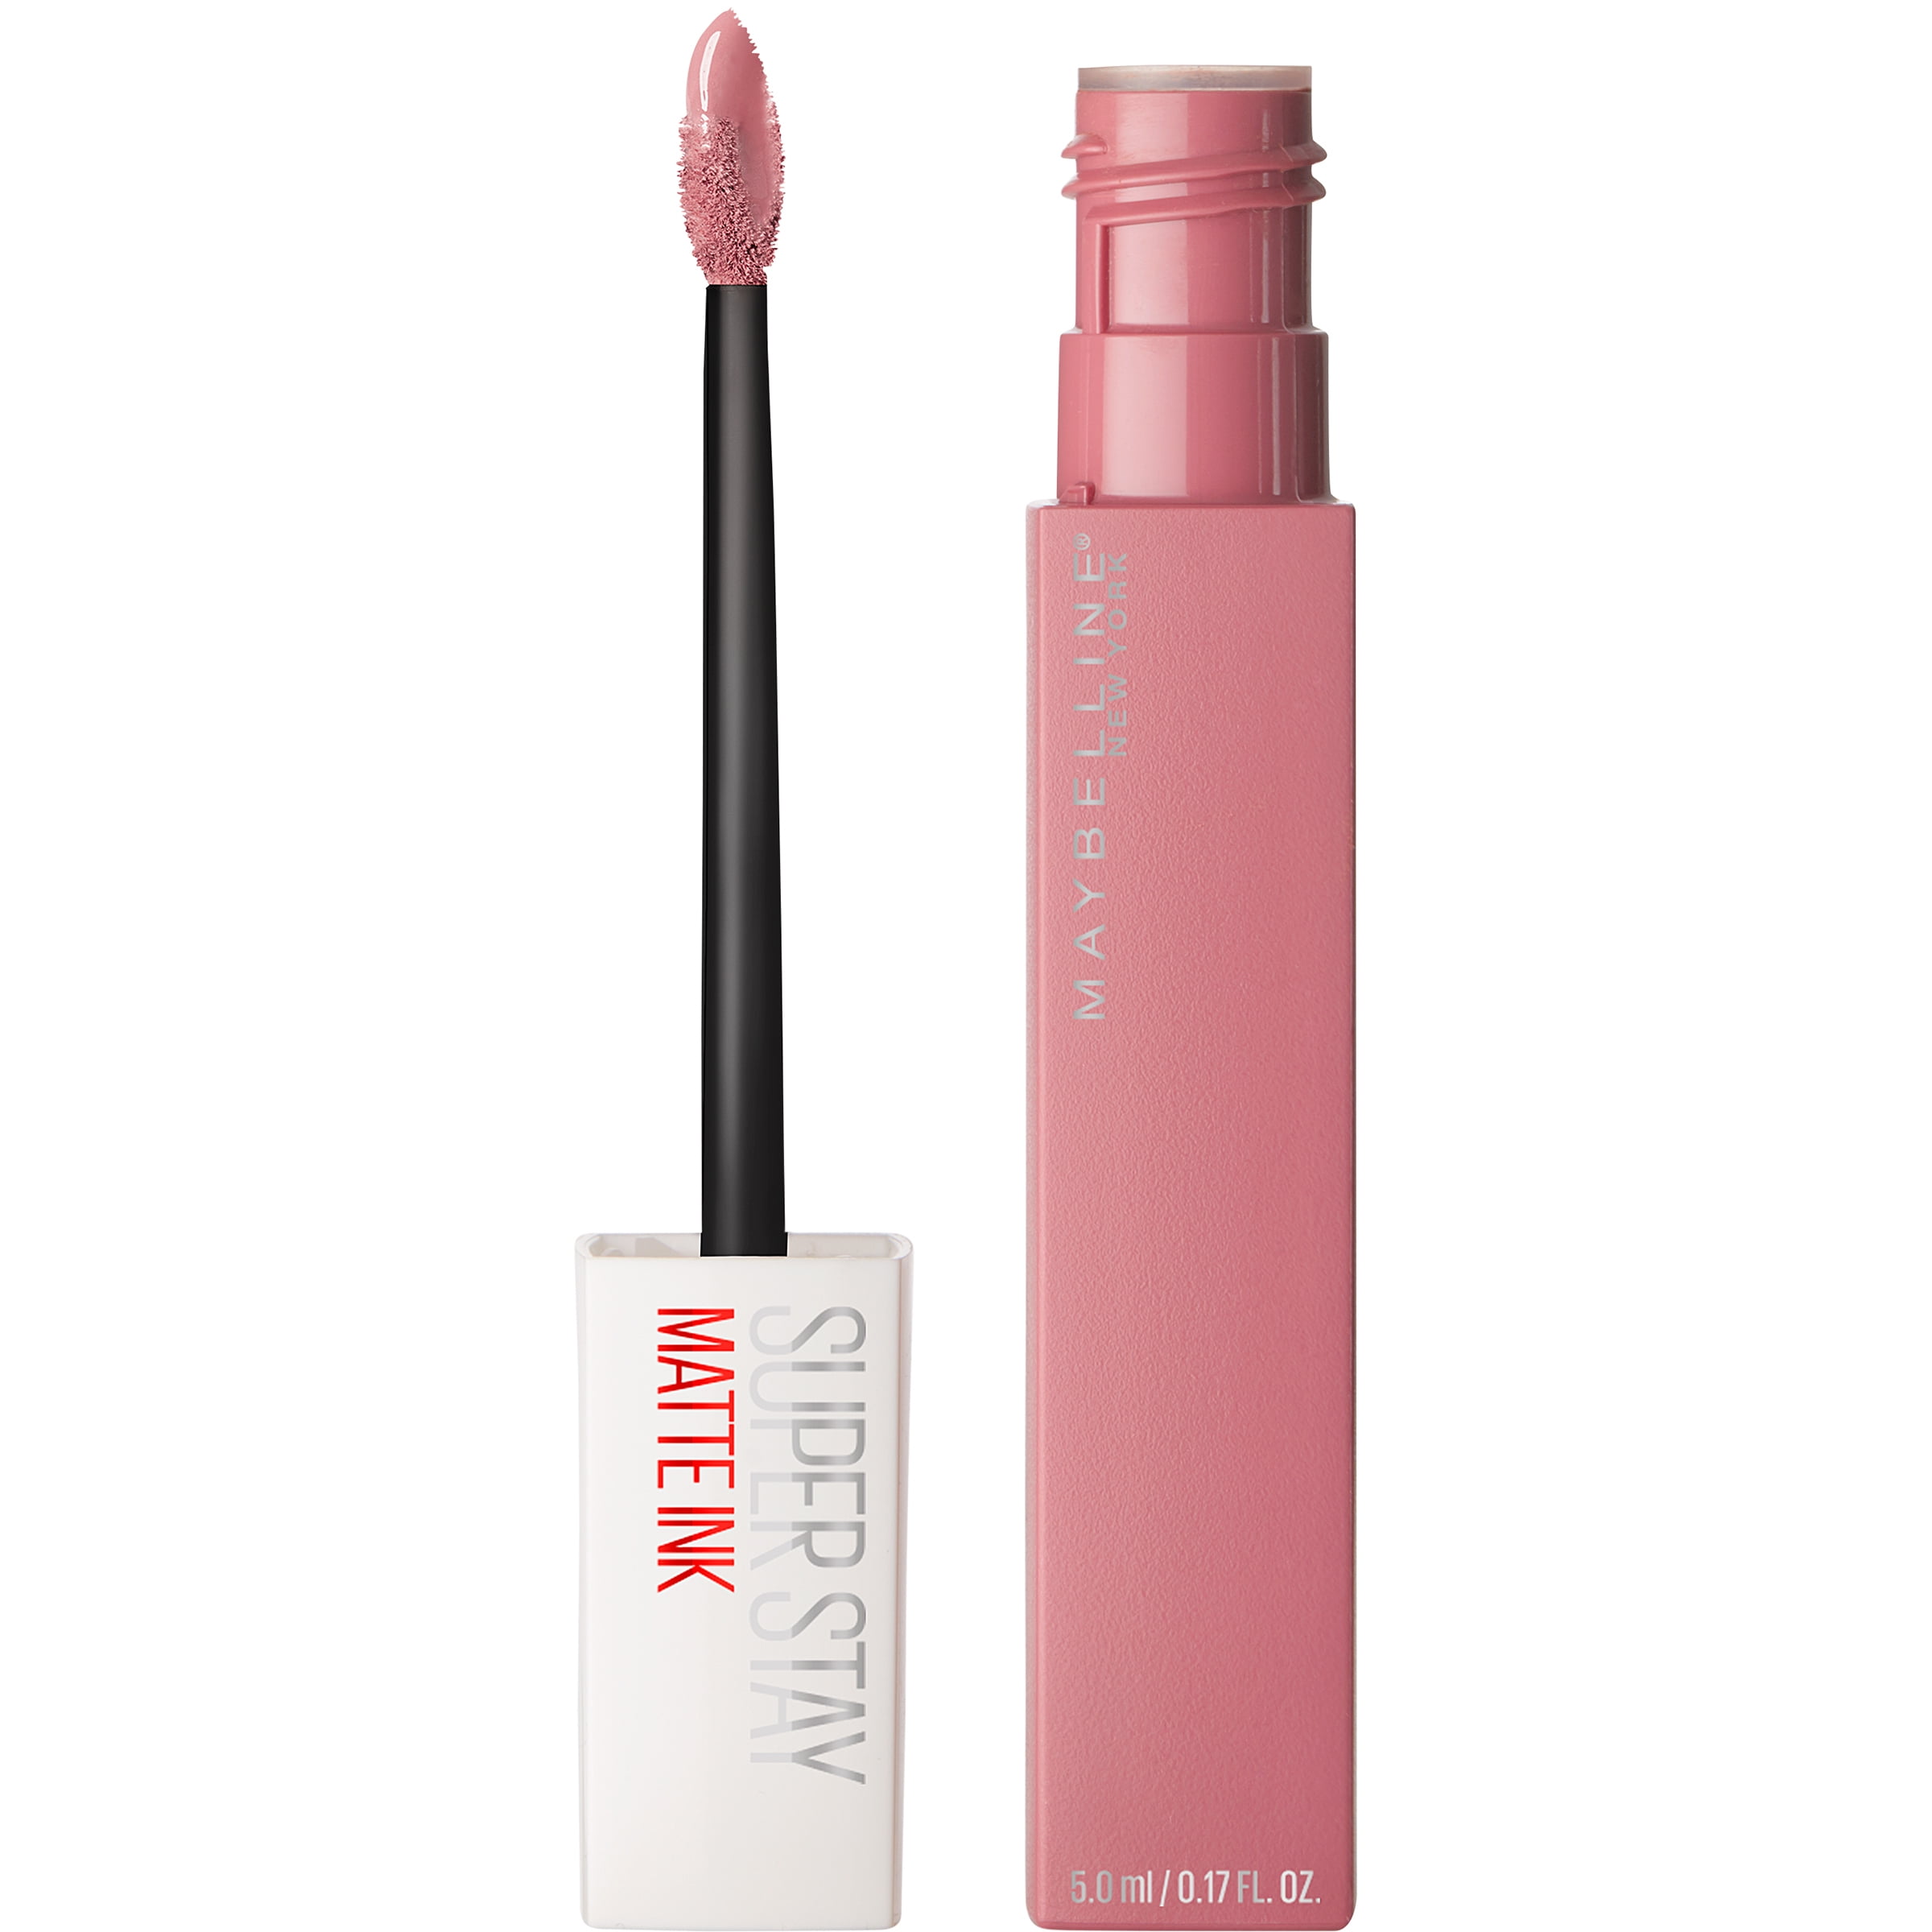 Maybelline Super Stay Matte Ink Liquid Lipstick, Lip Makeup, Dreamer, 0.17 fl. oz.